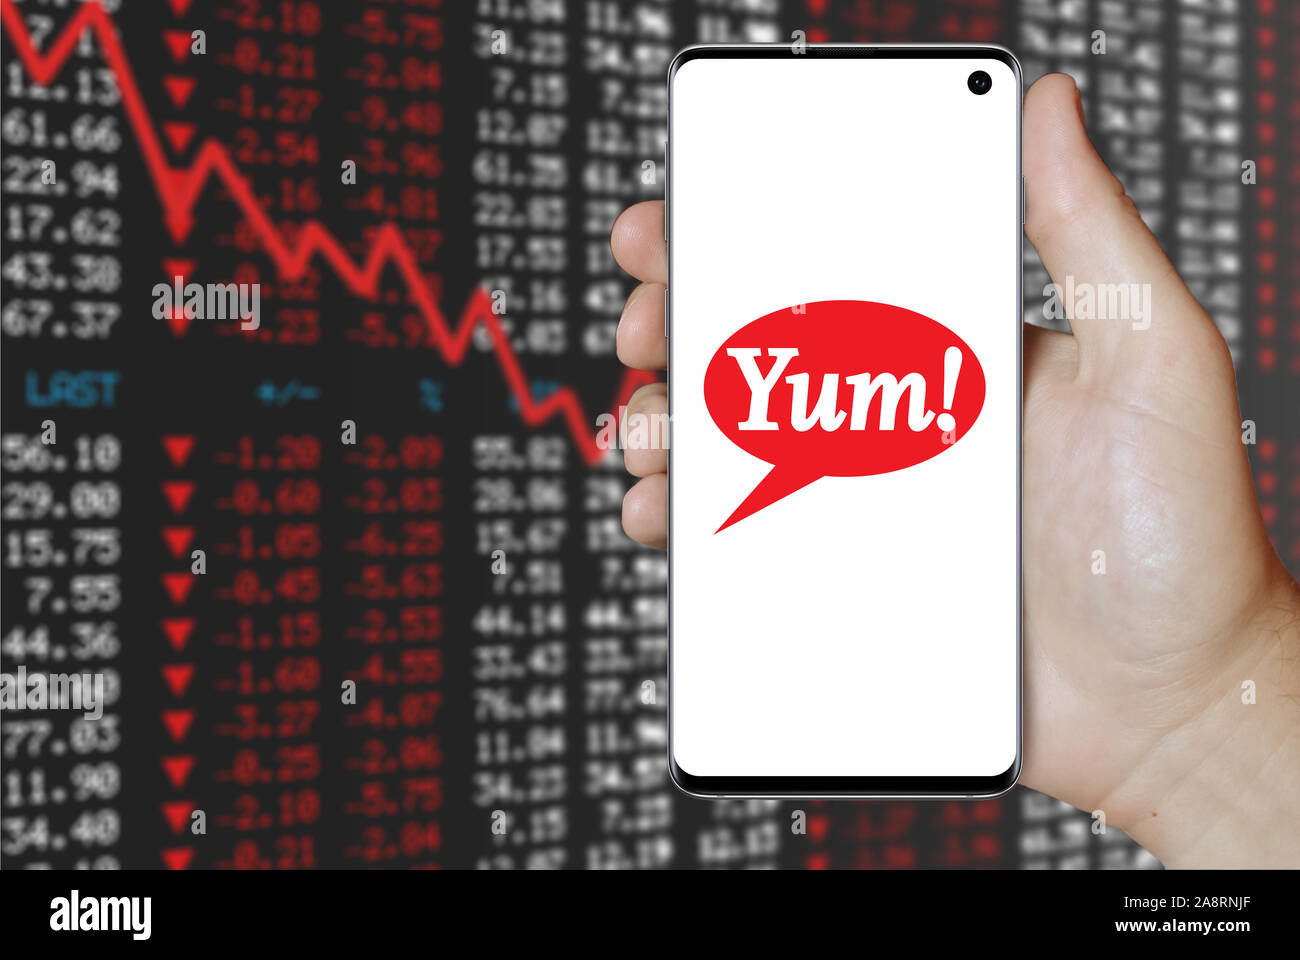 Logo of public company Yum! Brands Inc displayed on a smartphone. Negative stock market background. Credit: PIXDUCE Stock Photo